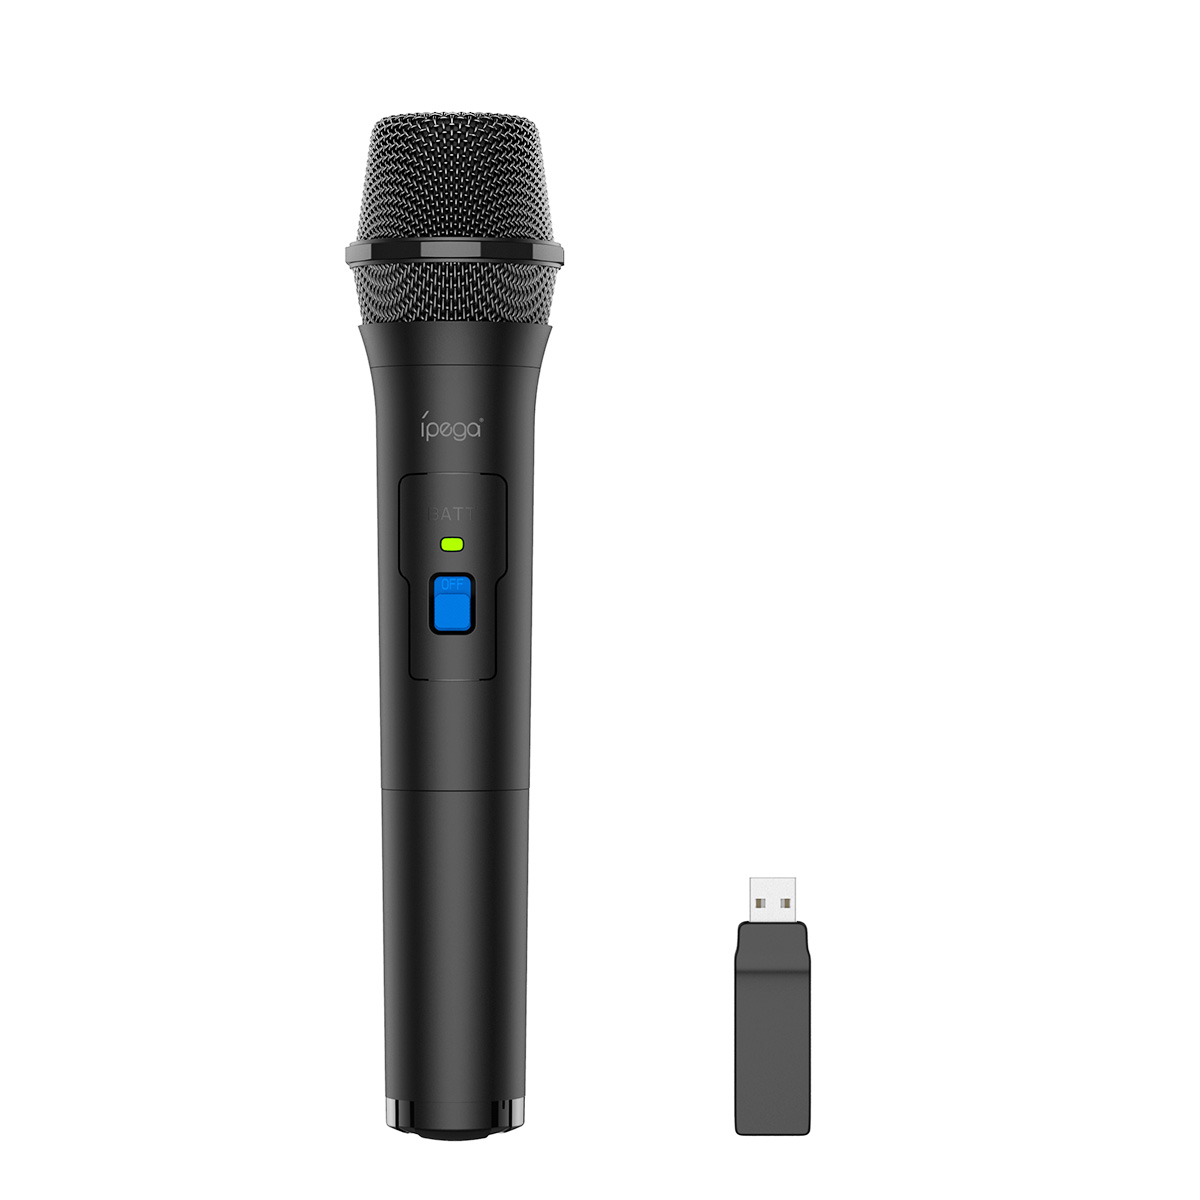 PG-9207 wireless microphone